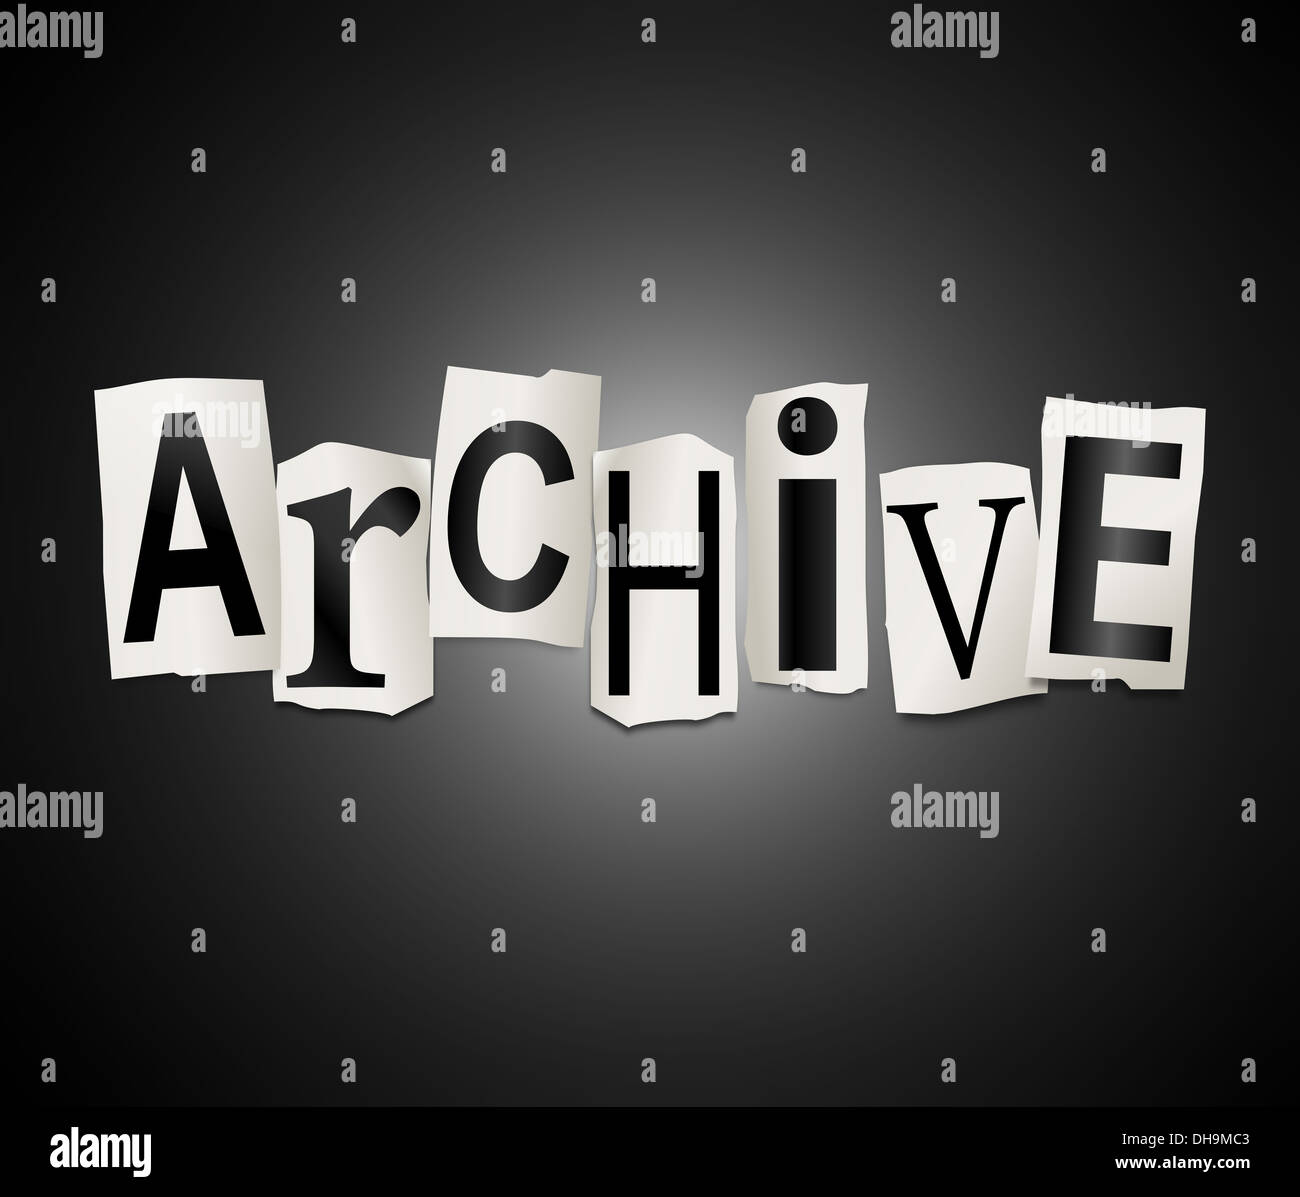 Archive concept. Stock Photo